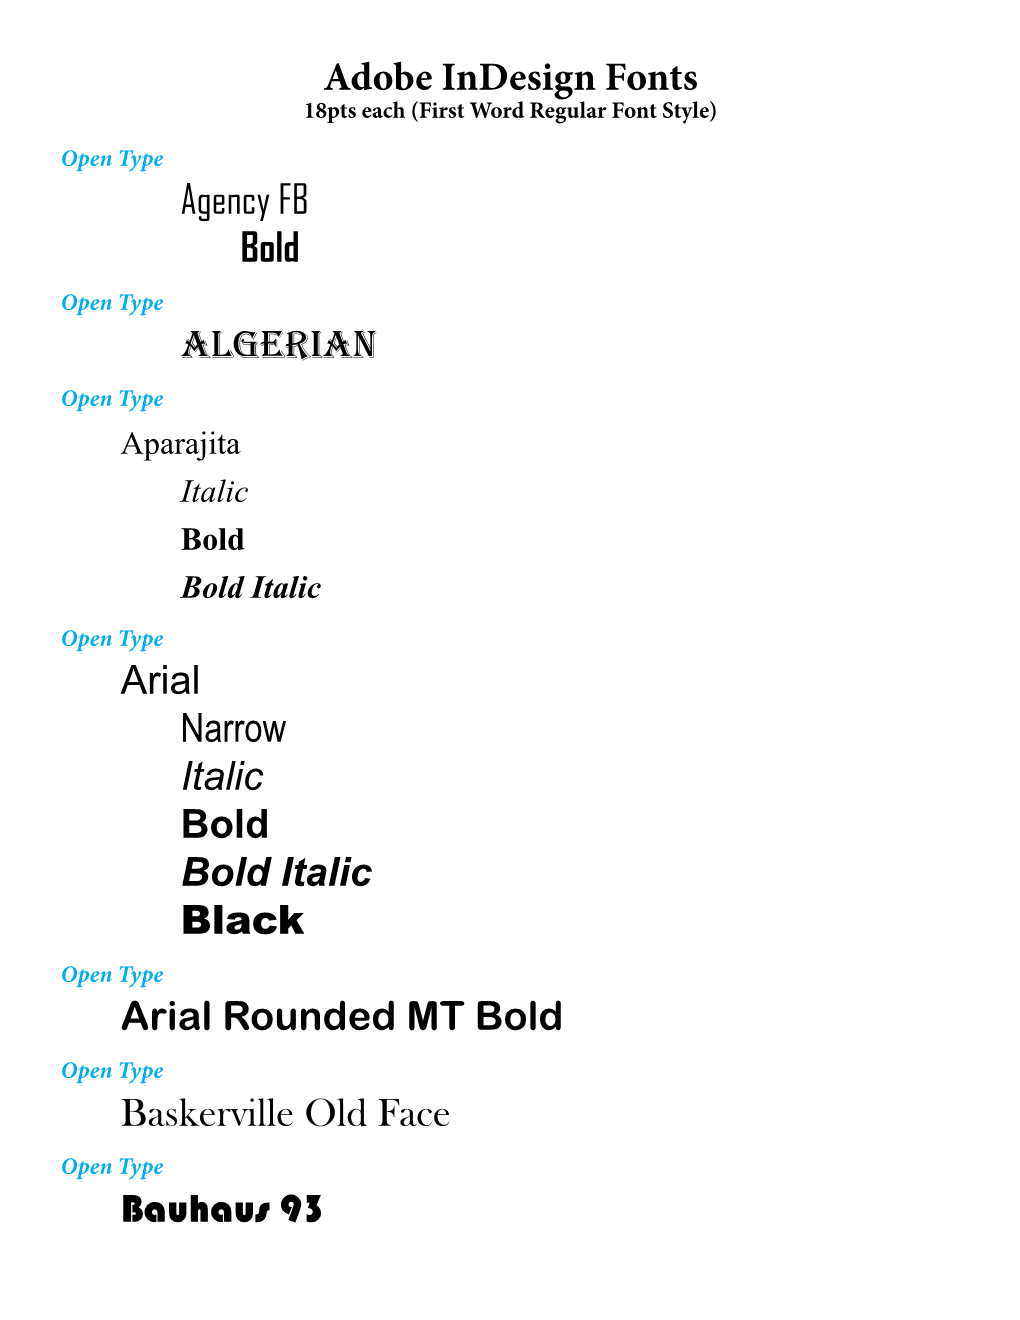 Adobe Indesign Fonts Agency FB Bold Algerian Aparajita Italic Bold